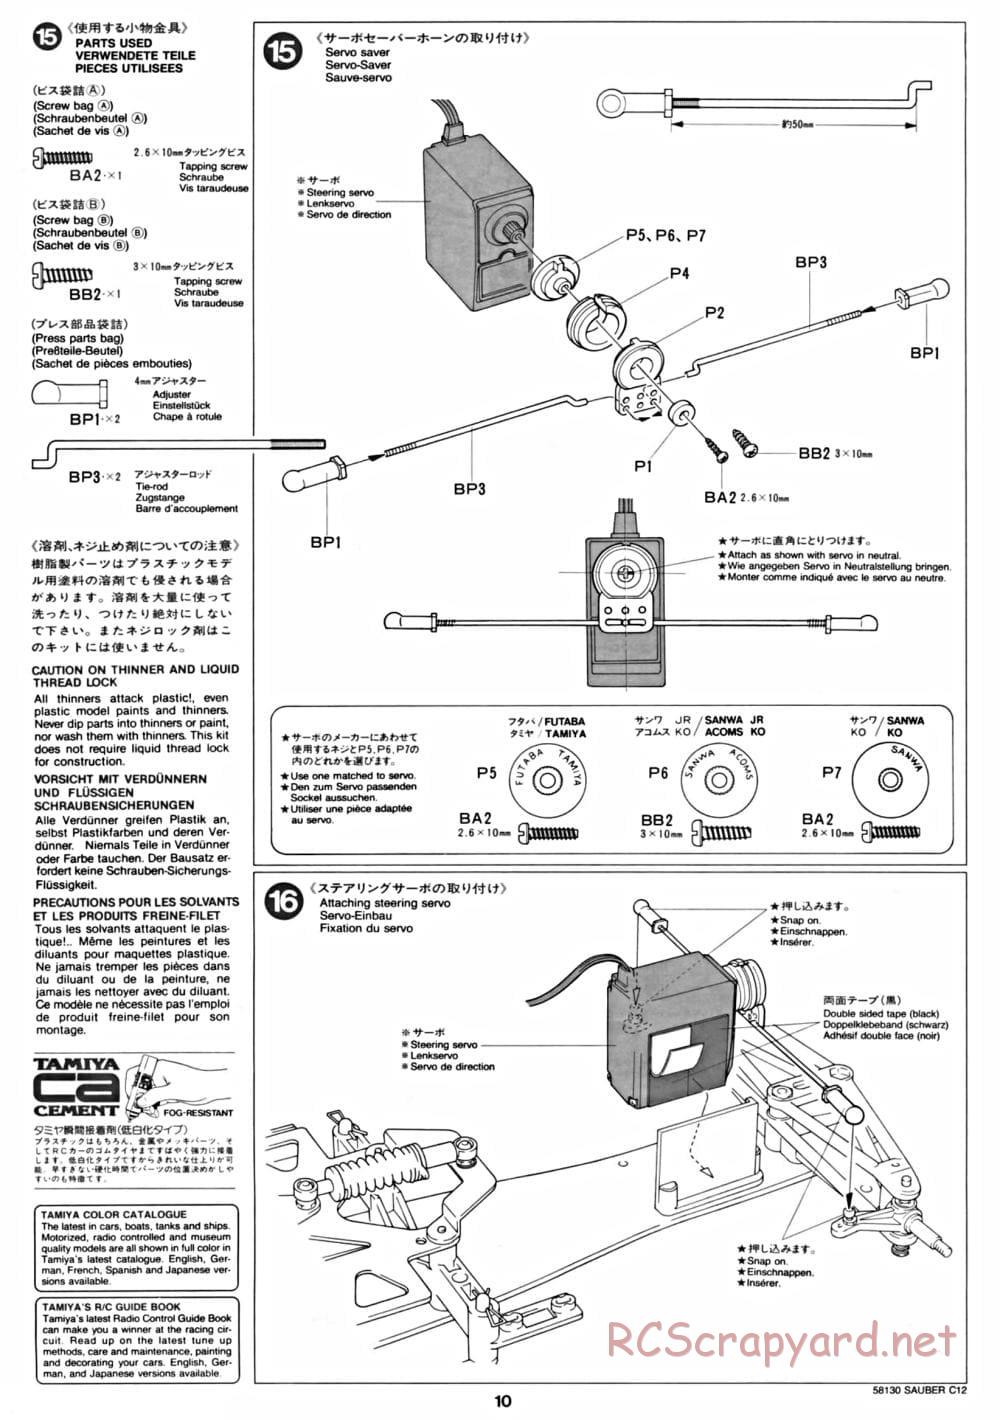 Tamiya - Sauber C12 - F103 Chassis - Manual - Page 10